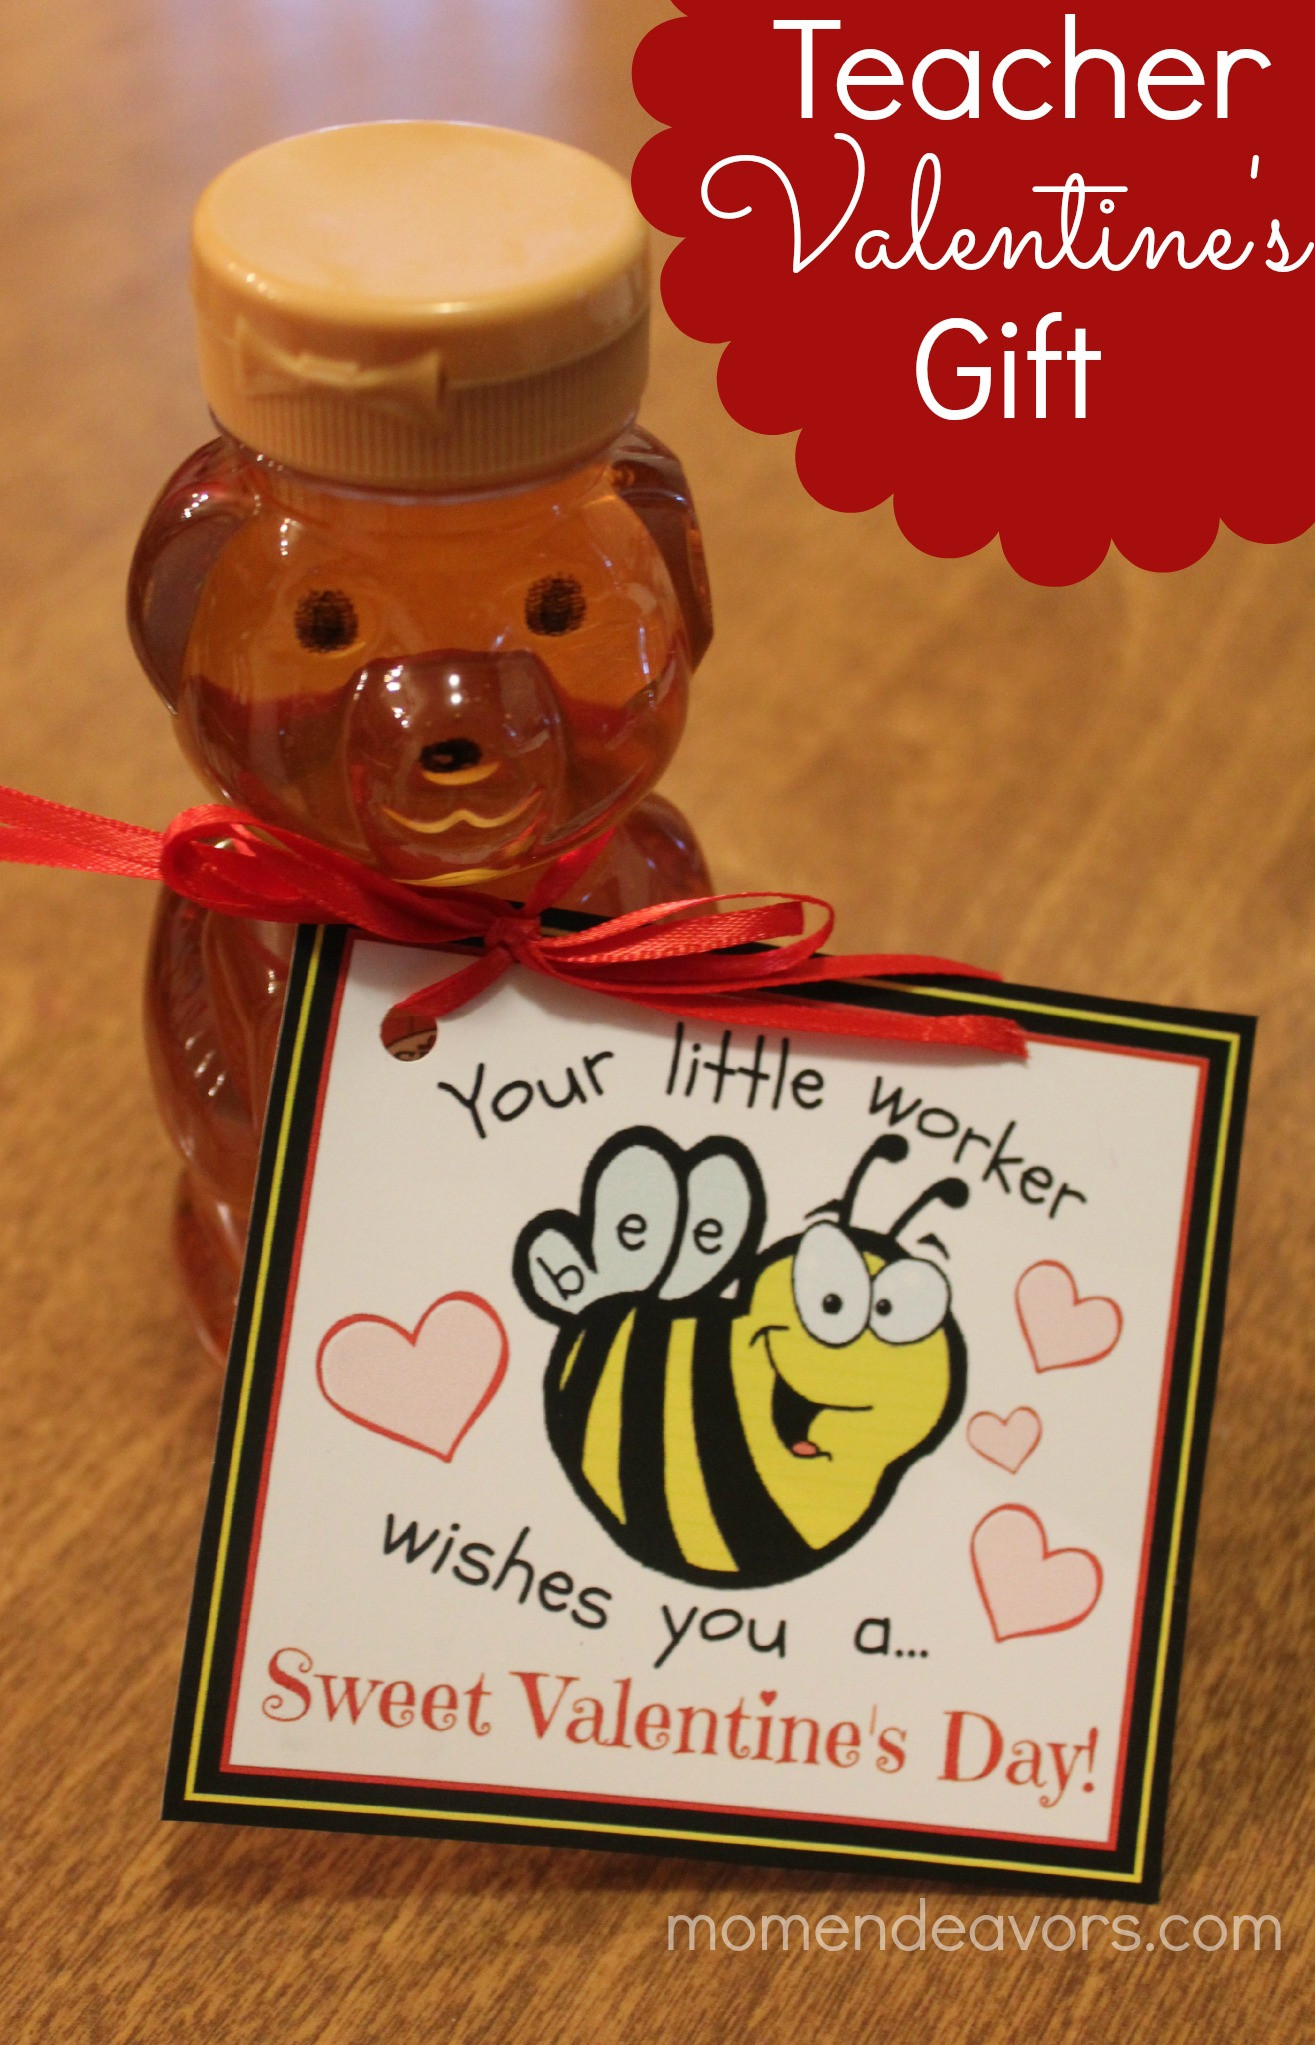 Teacher Valentines Gift Ideas Inspirational Bee themed Teacher Valentine’s Gift